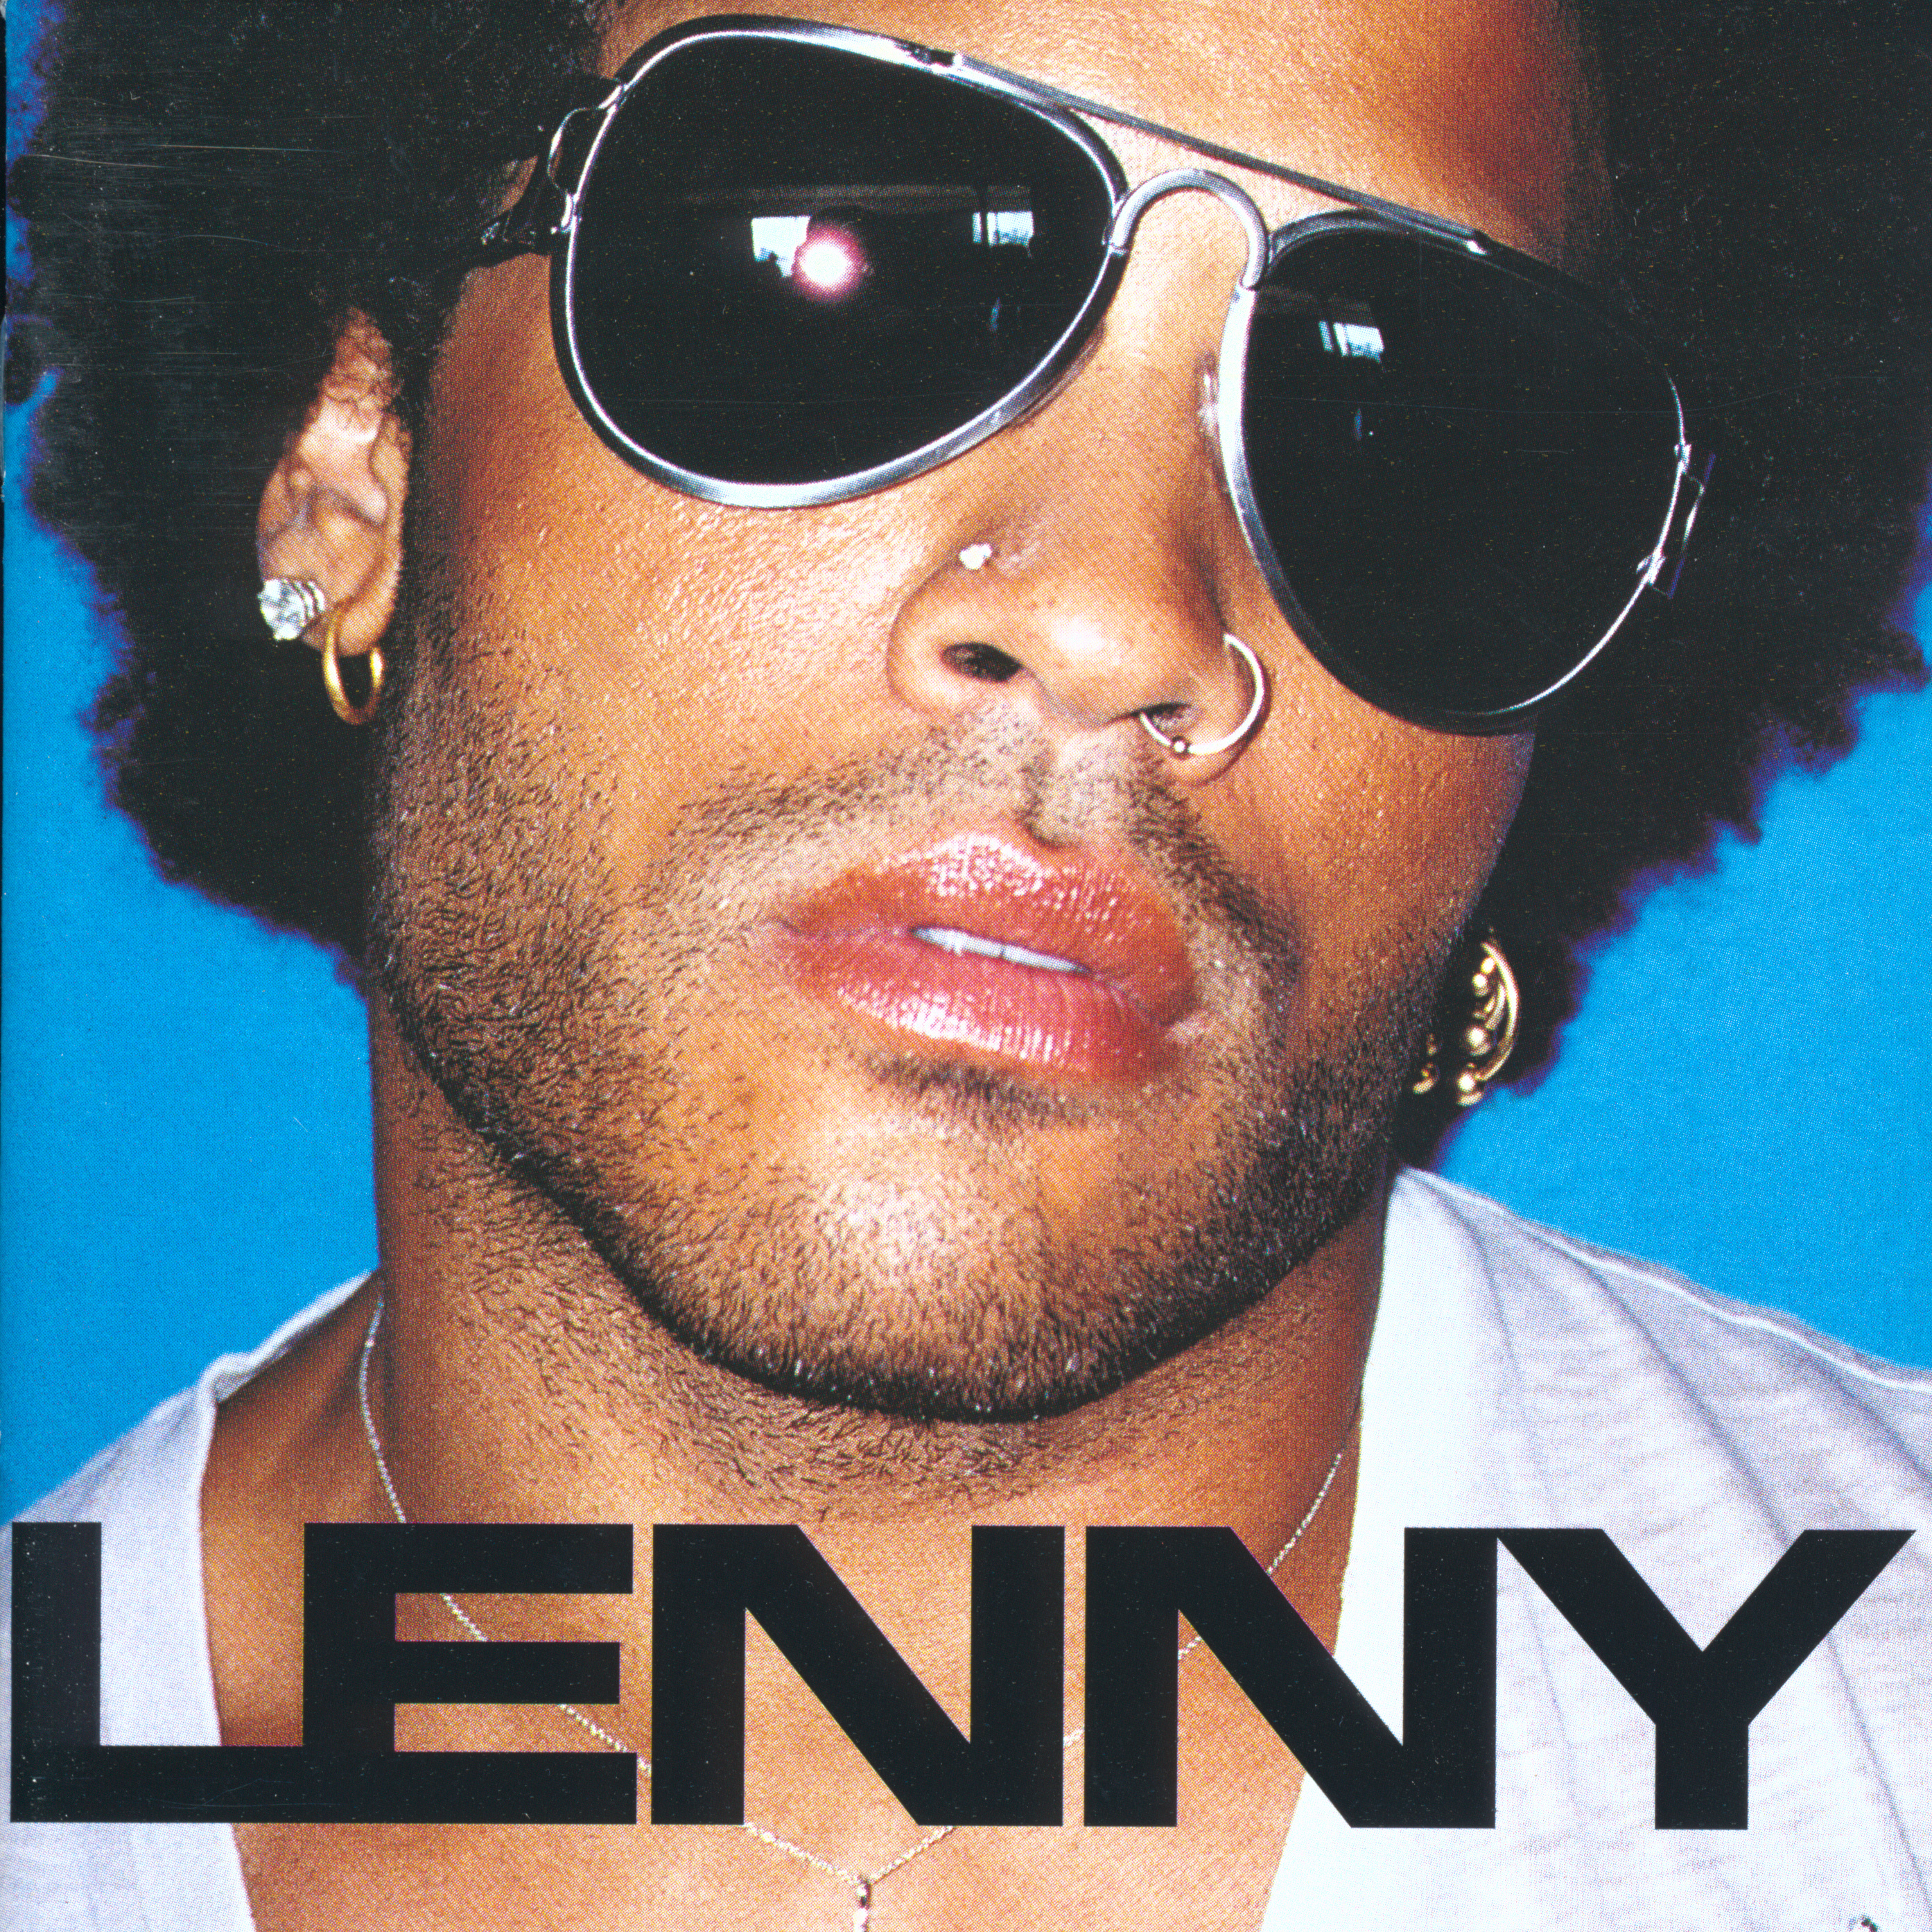 Release “Lenny” by Lenny Kravitz - Cover Art - MusicBrainz